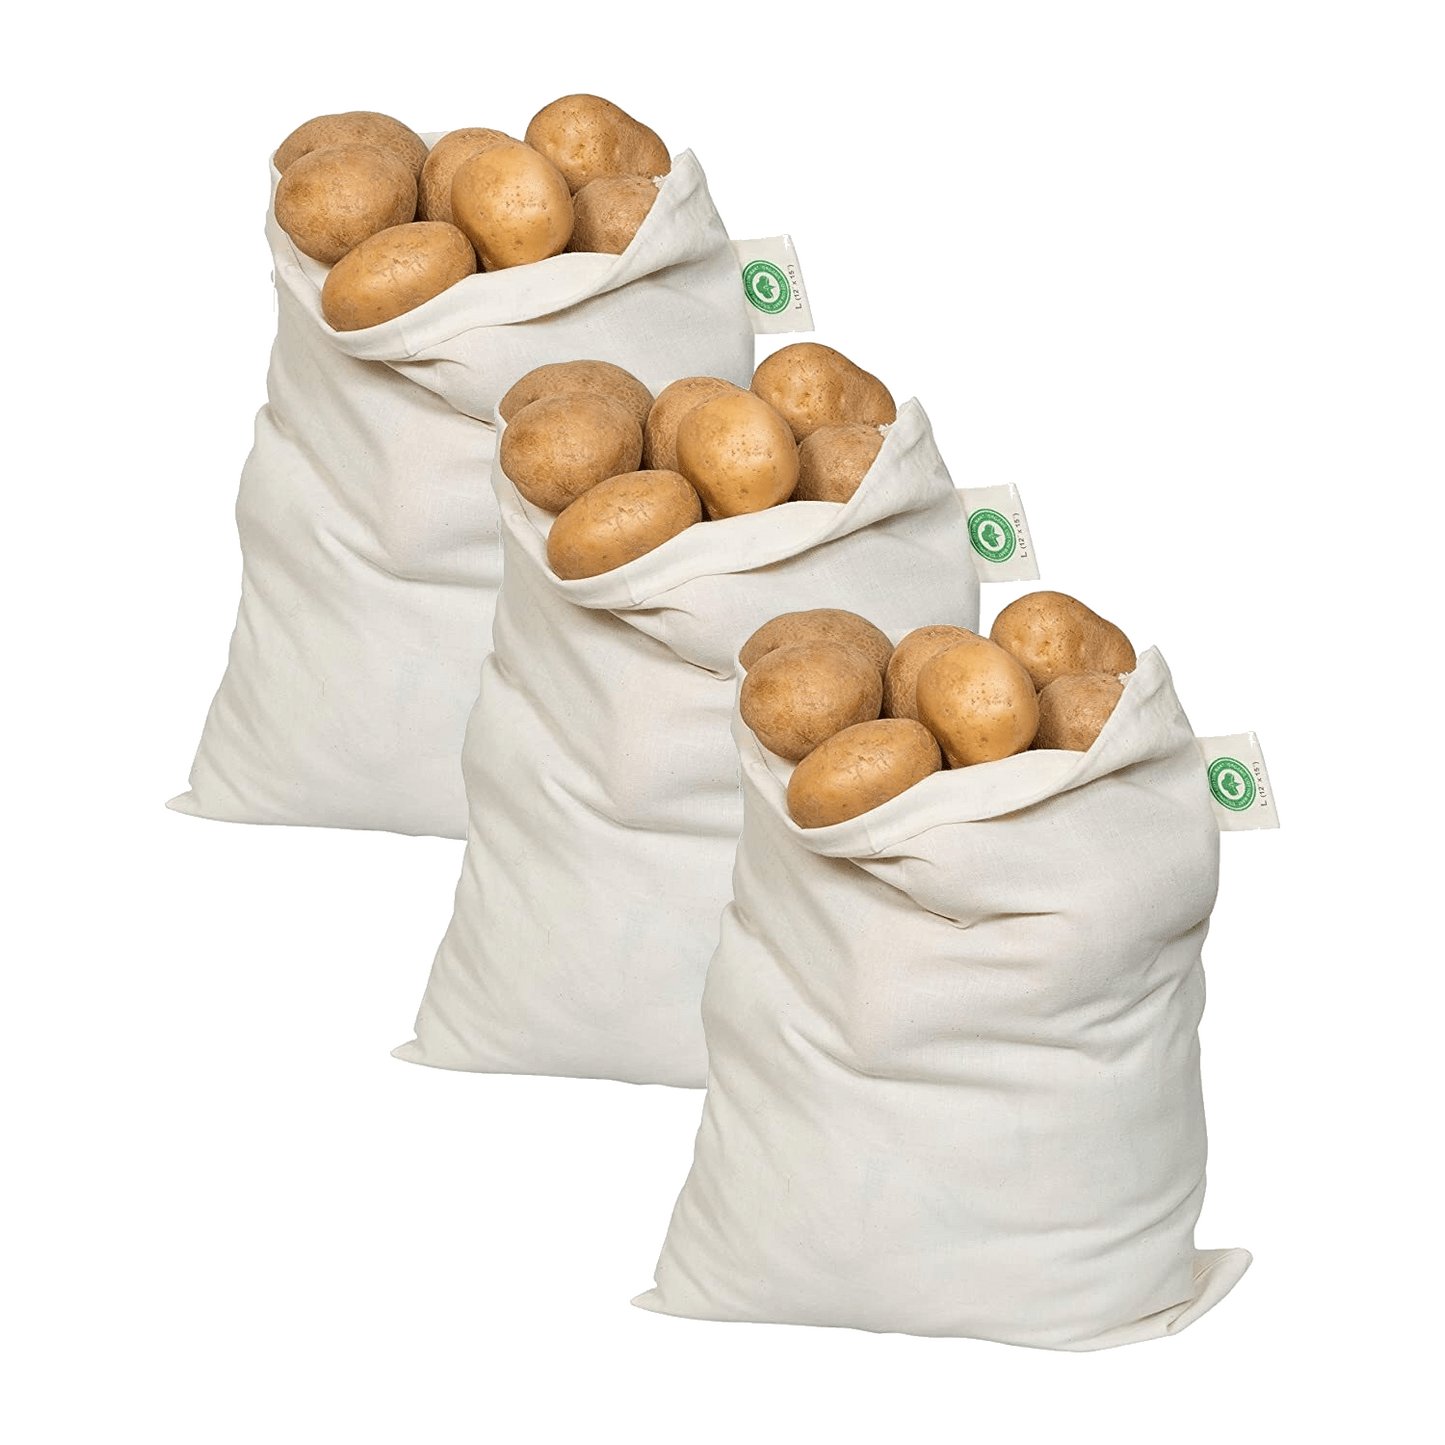 cotton drawstring bags in bulk